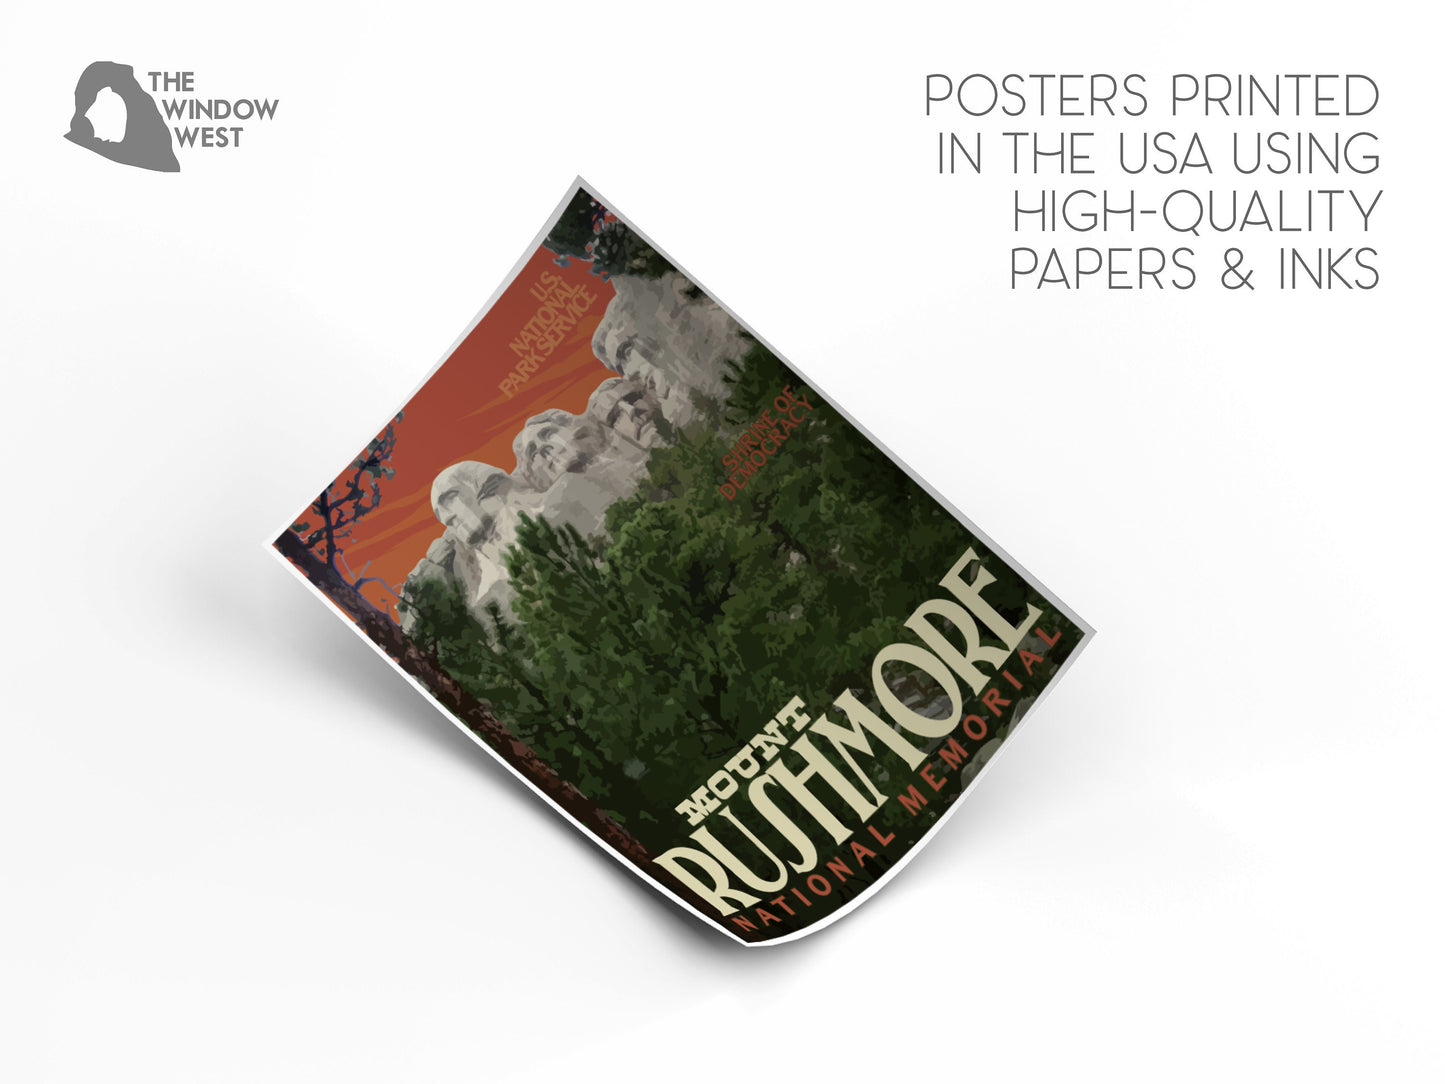 Mount Rushmore National Memorial Print, Mount Rushmore South Dakota Poster, Vintage Style Travel Art